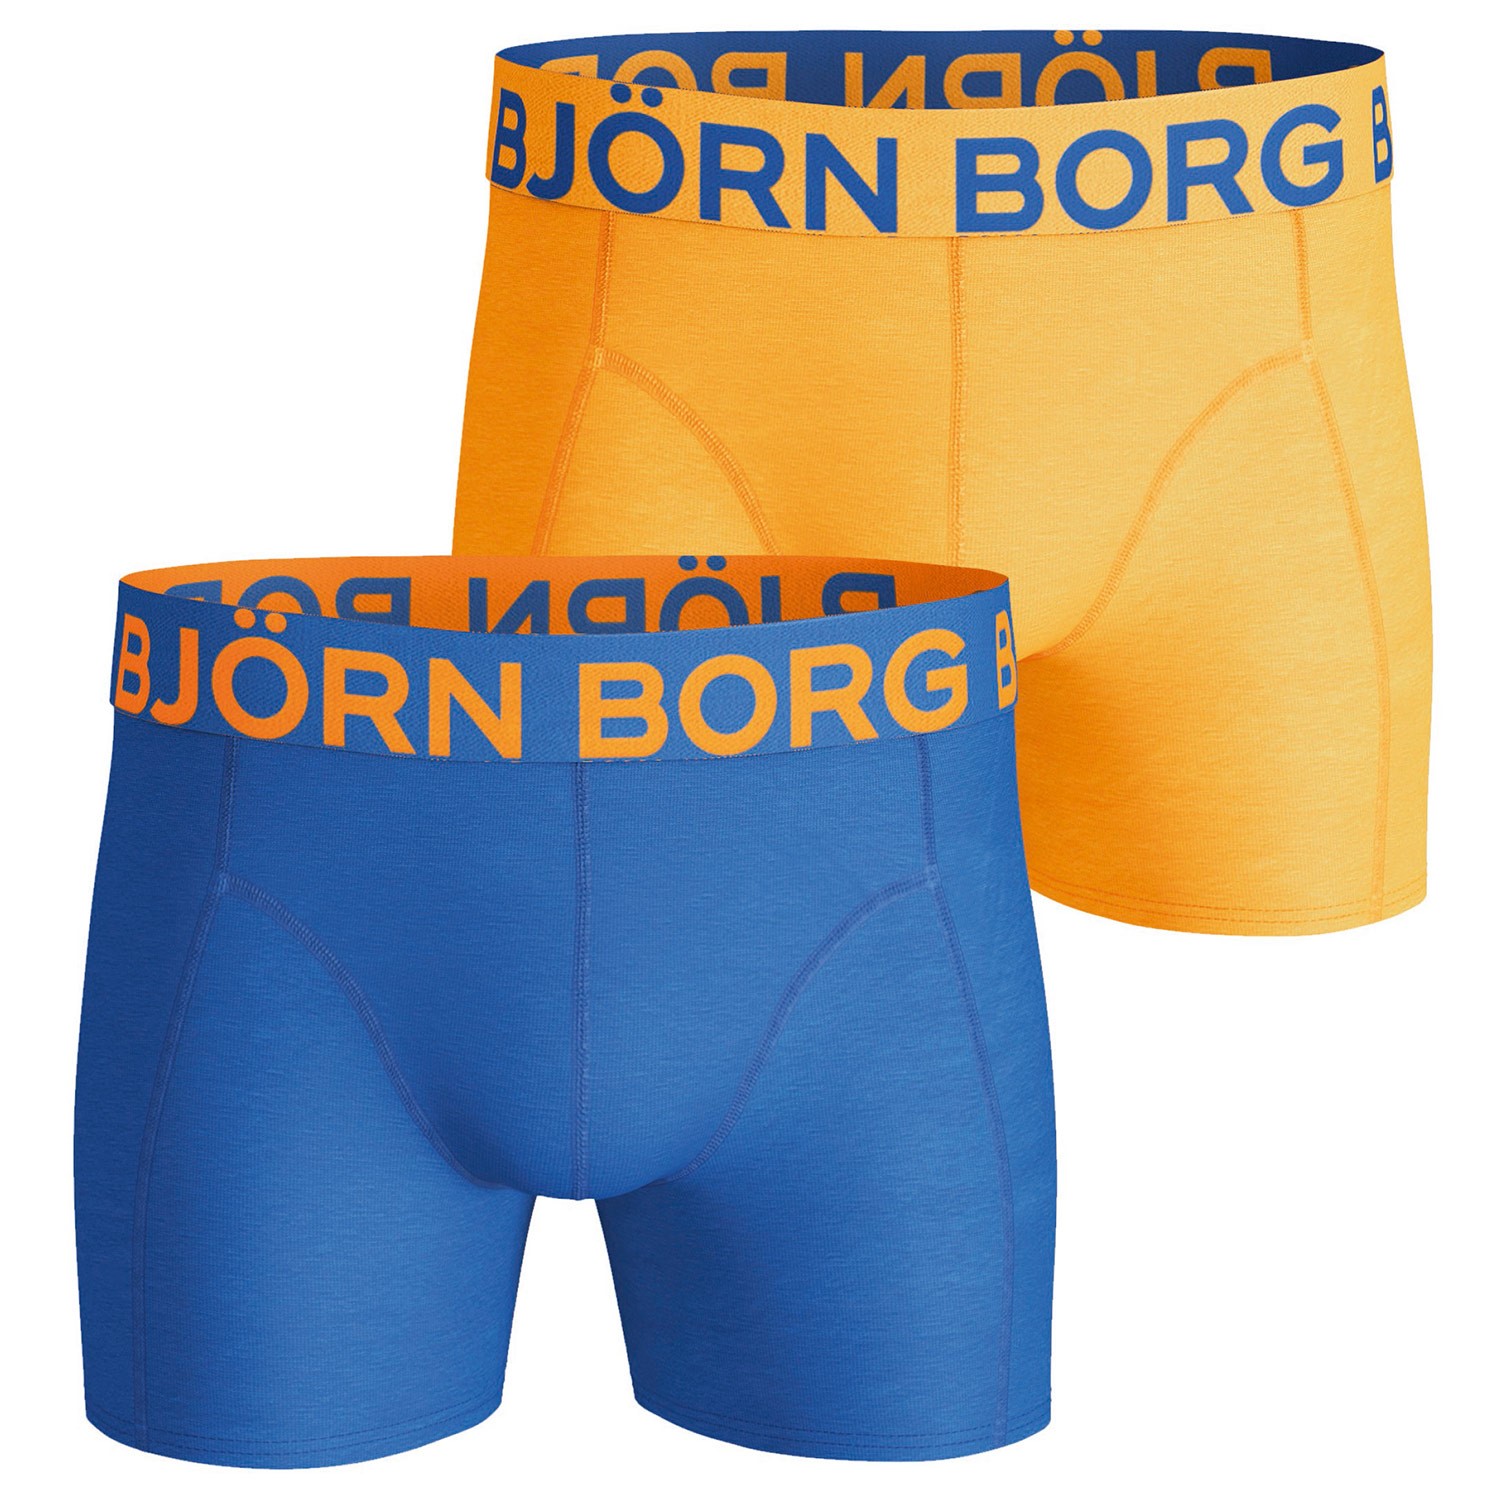 Björn Borg Shorts Neon Solids